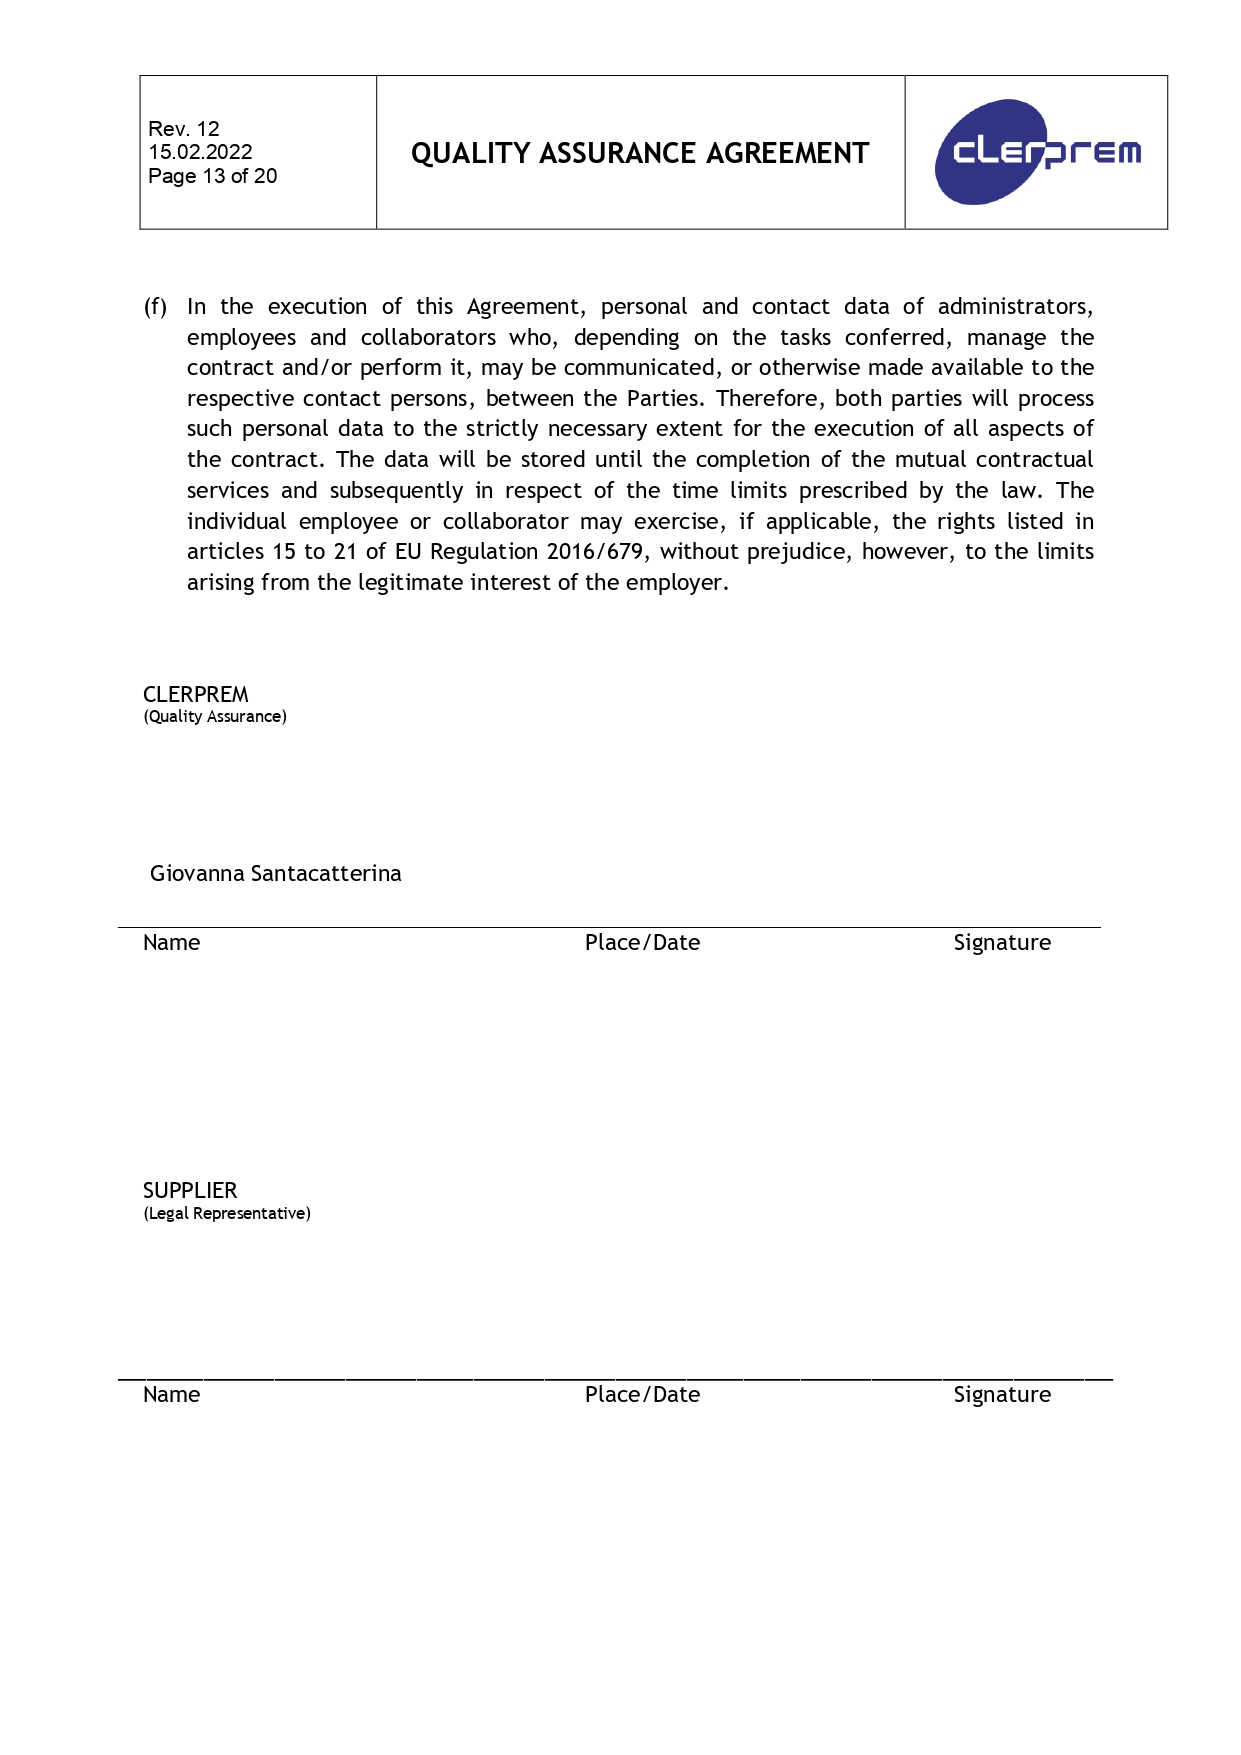 Quality Assurance Agreement Clerprem SpA Rev 13_page-0013